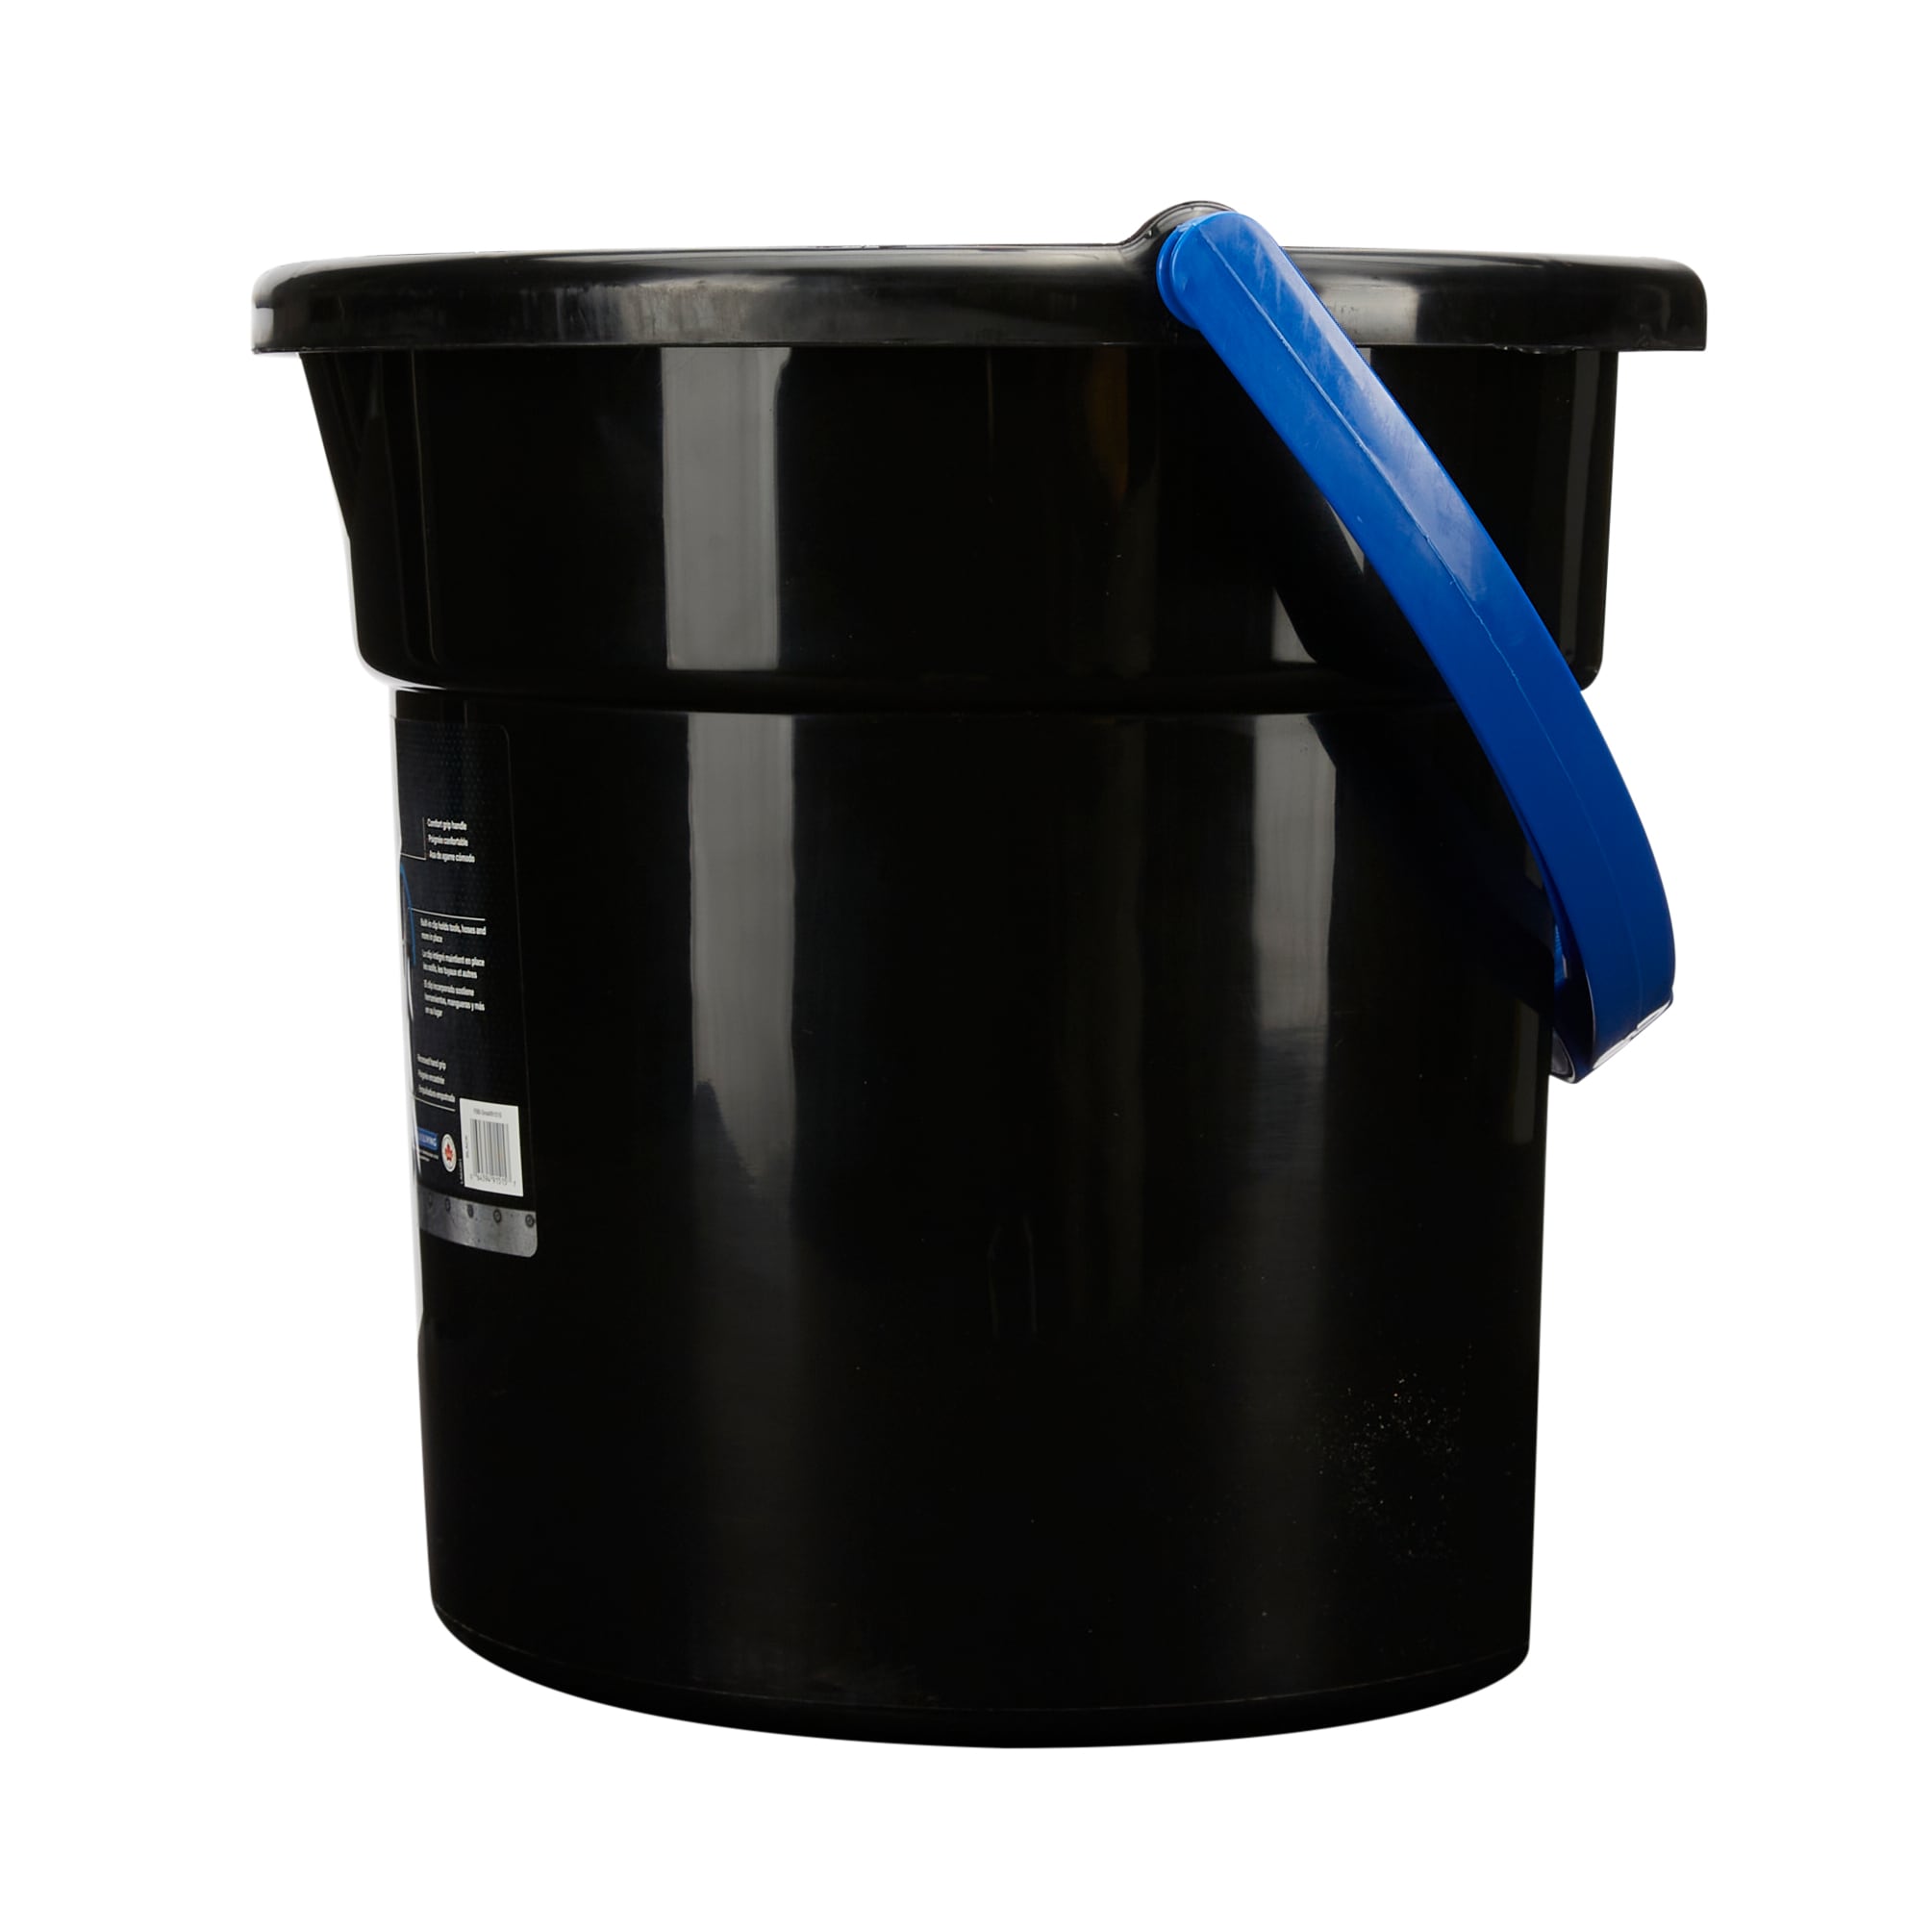  BUTIFULSIC Plastic Paint Bucket mop Buckets Paint Container  Paint Storage Bucket Puke Bucket Utility Bucket Metal Container with lid  Paint Plastic bin Small Black Bucket Multifunction : Tools & Home  Improvement